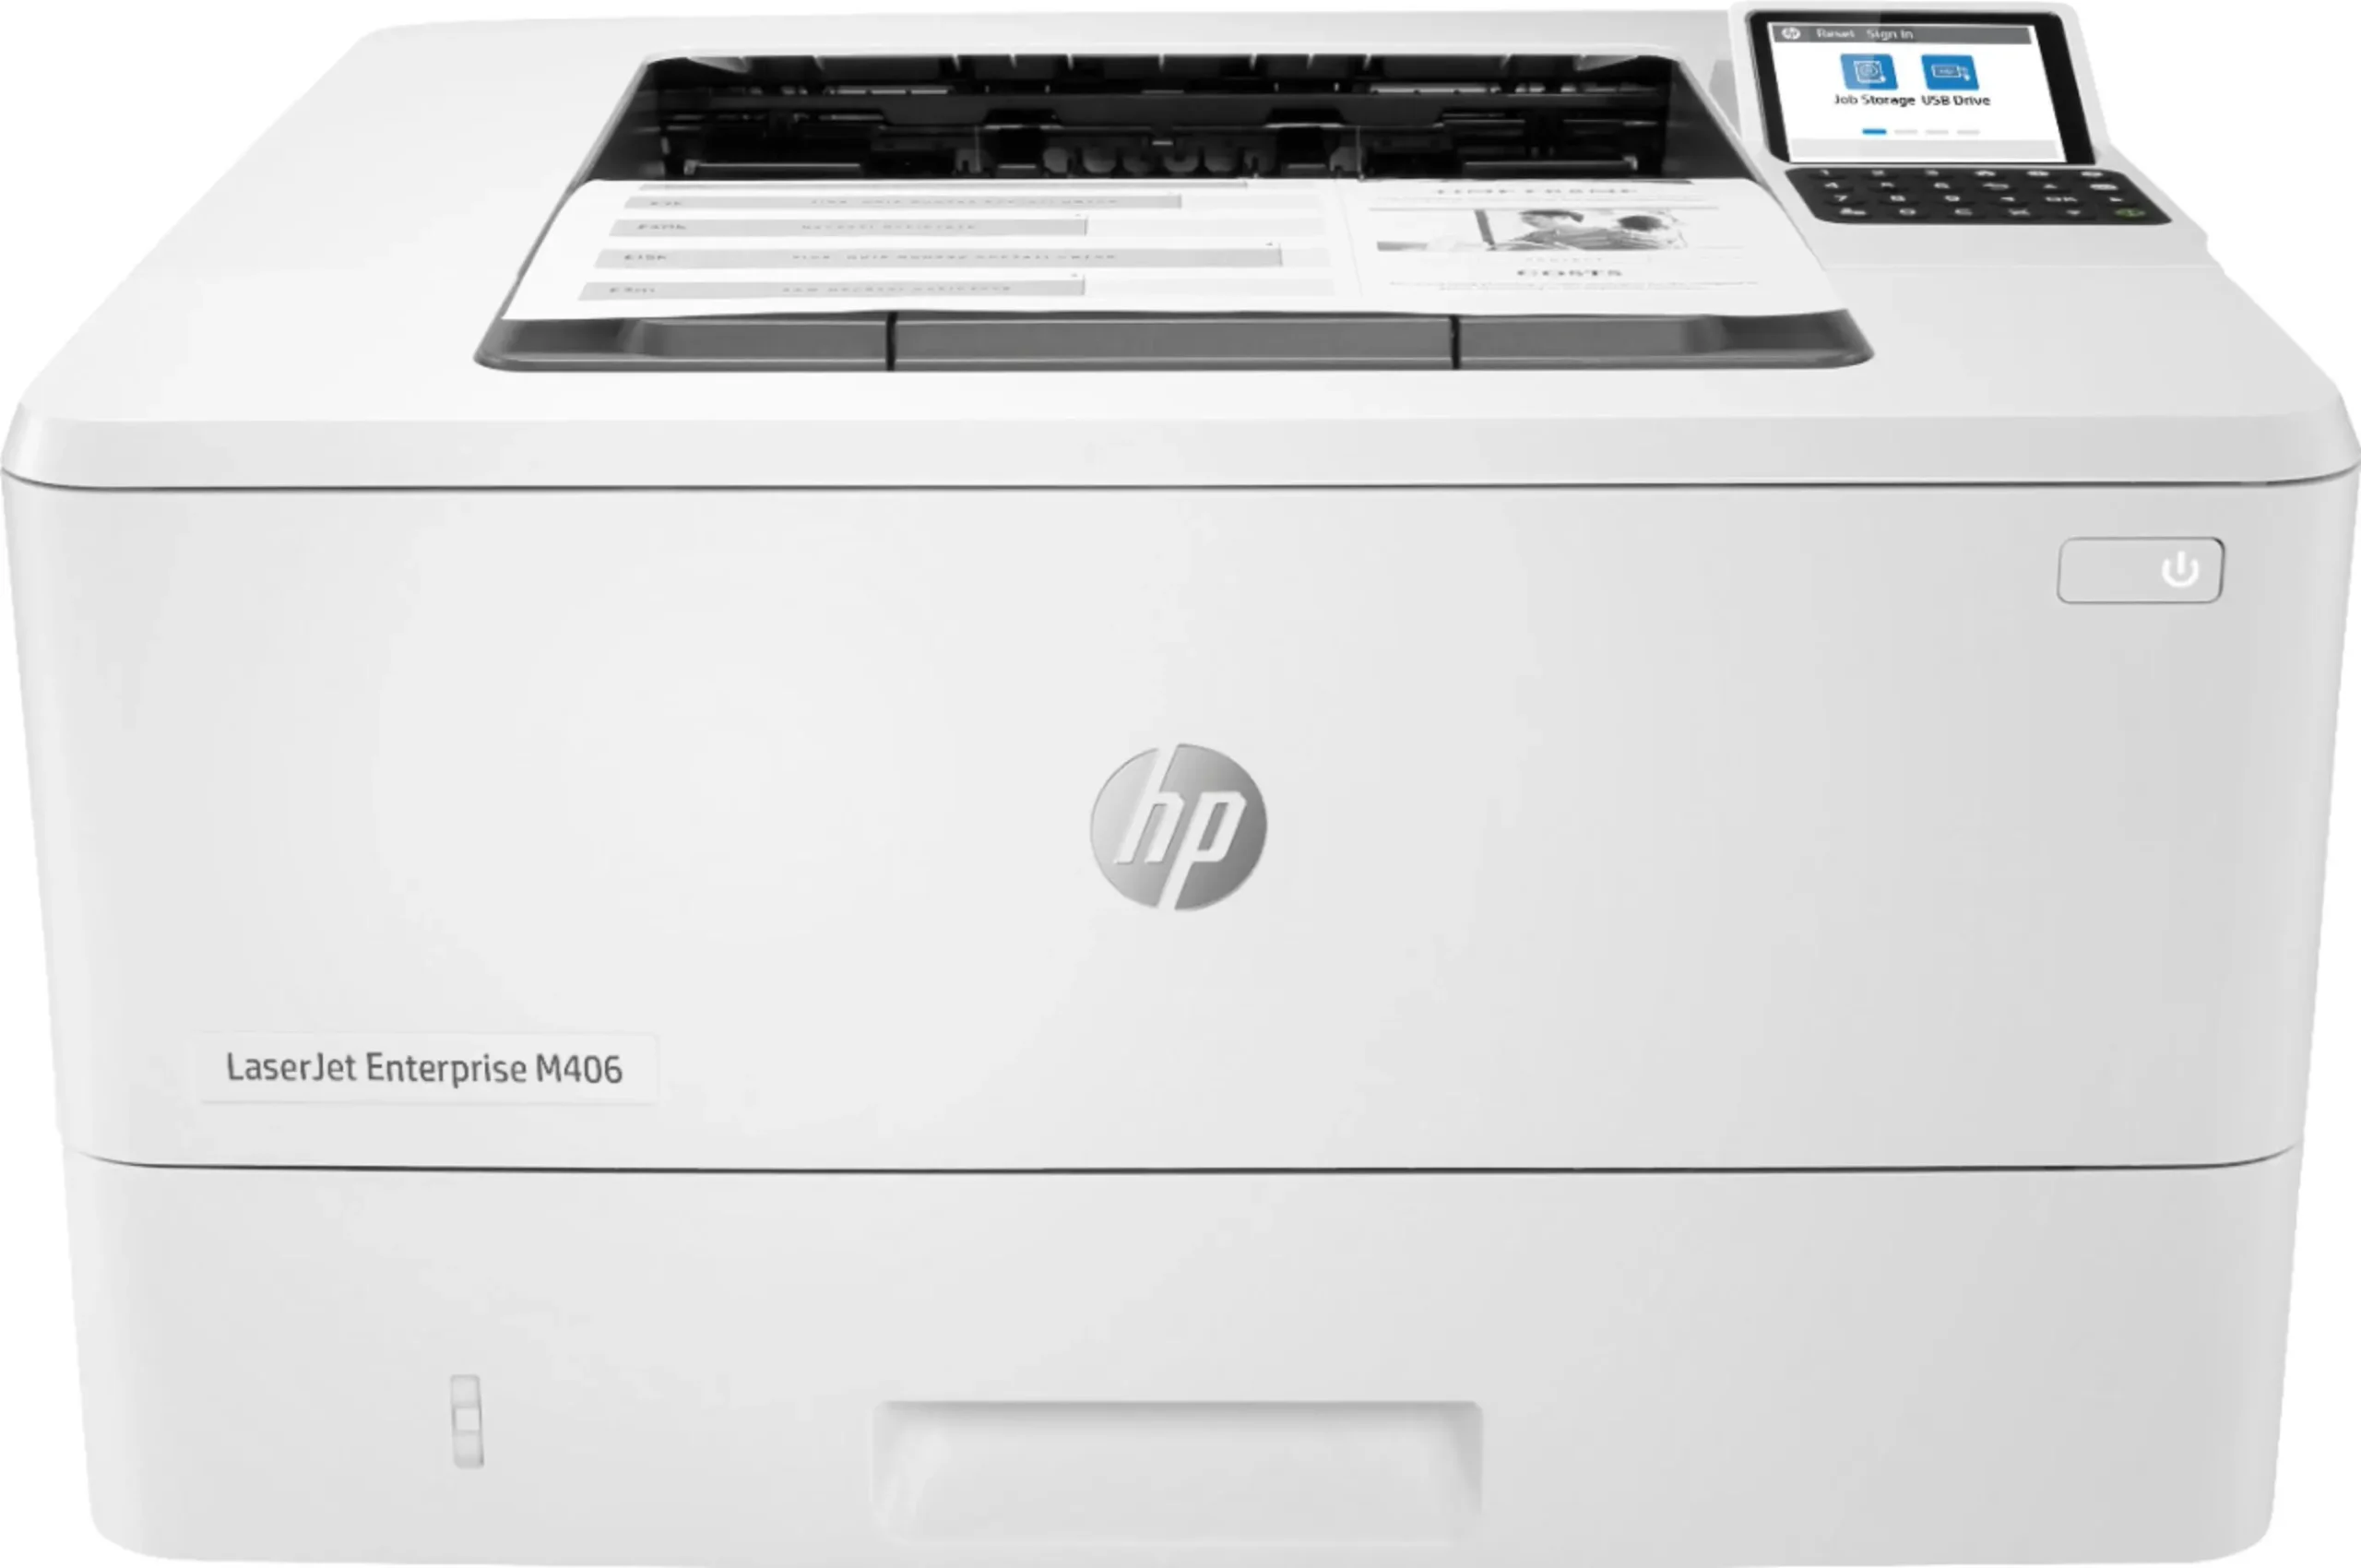 hewlett packard hp406 printer - Is HP M406 Wireless